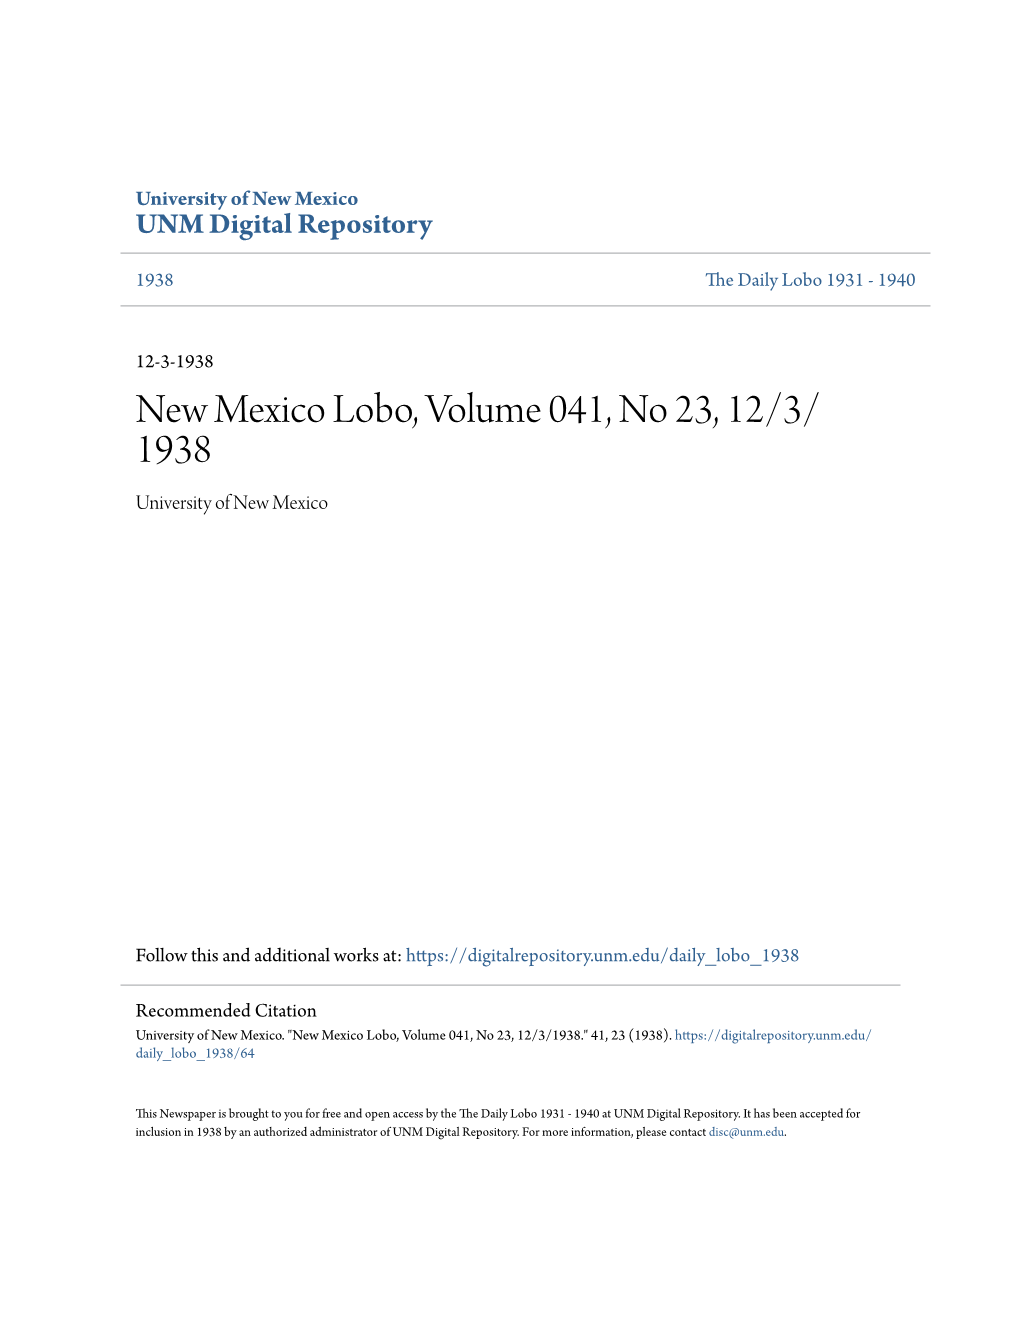 New Mexico Lobo, Volume 041, No 23, 12/3/1938." 41, 23 (1938)